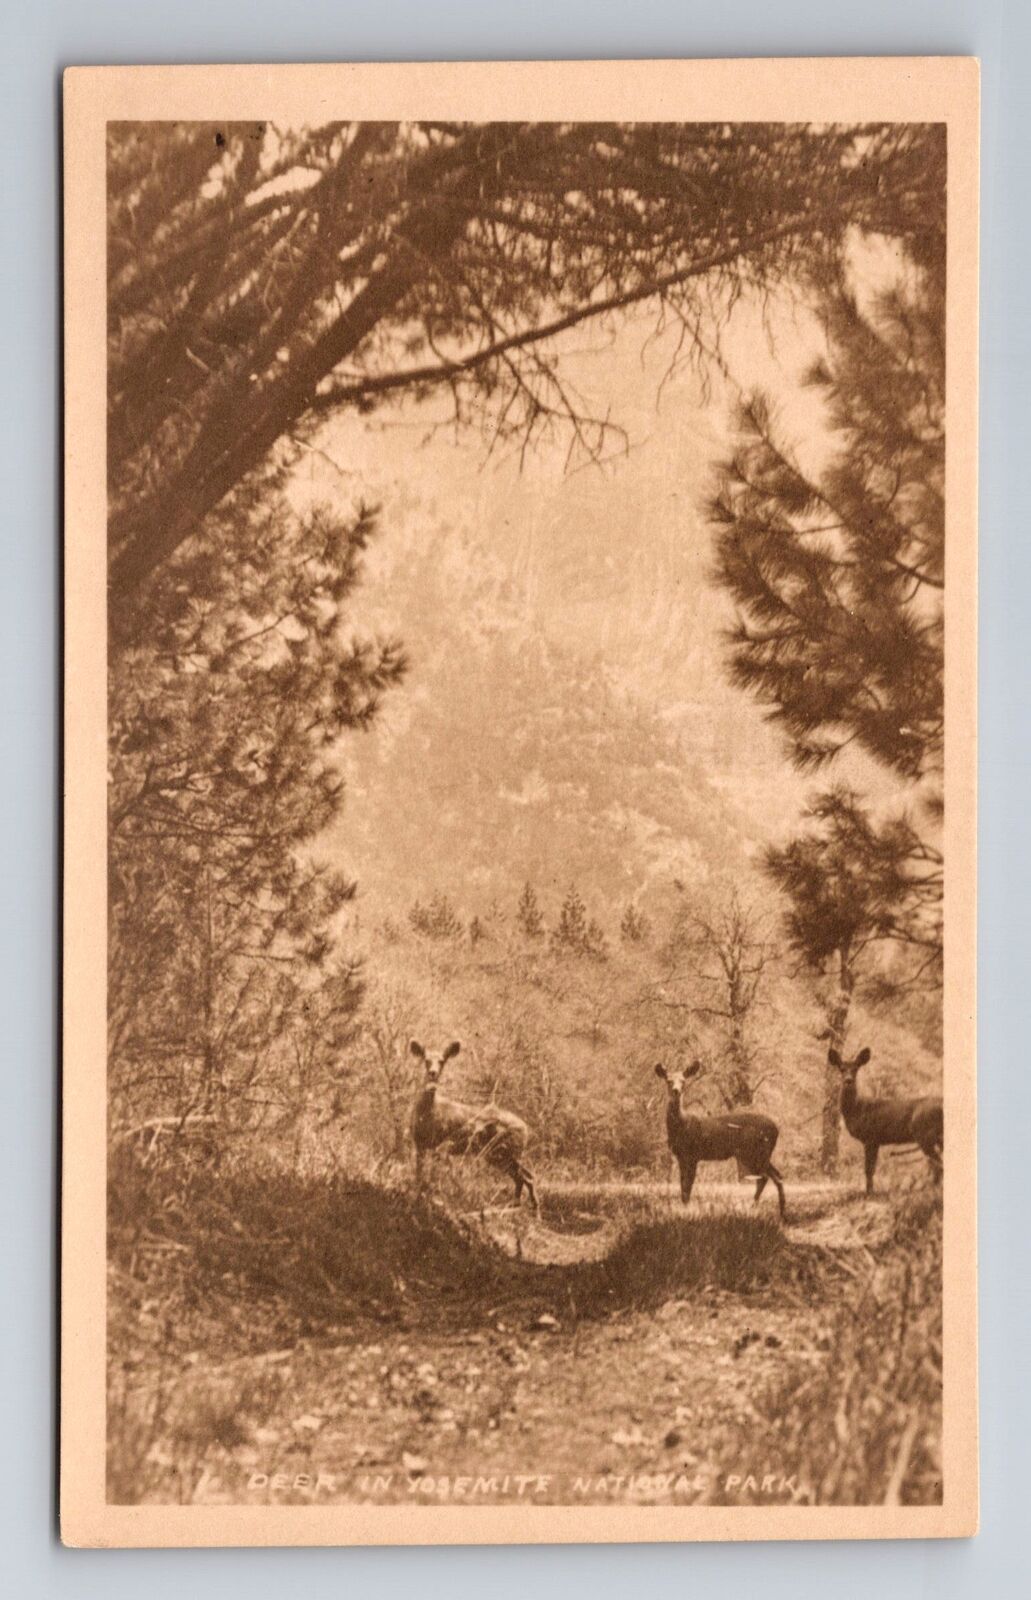 Yosemite National Park CA-California, Deer in Park, Vintage Souvenir Postcard